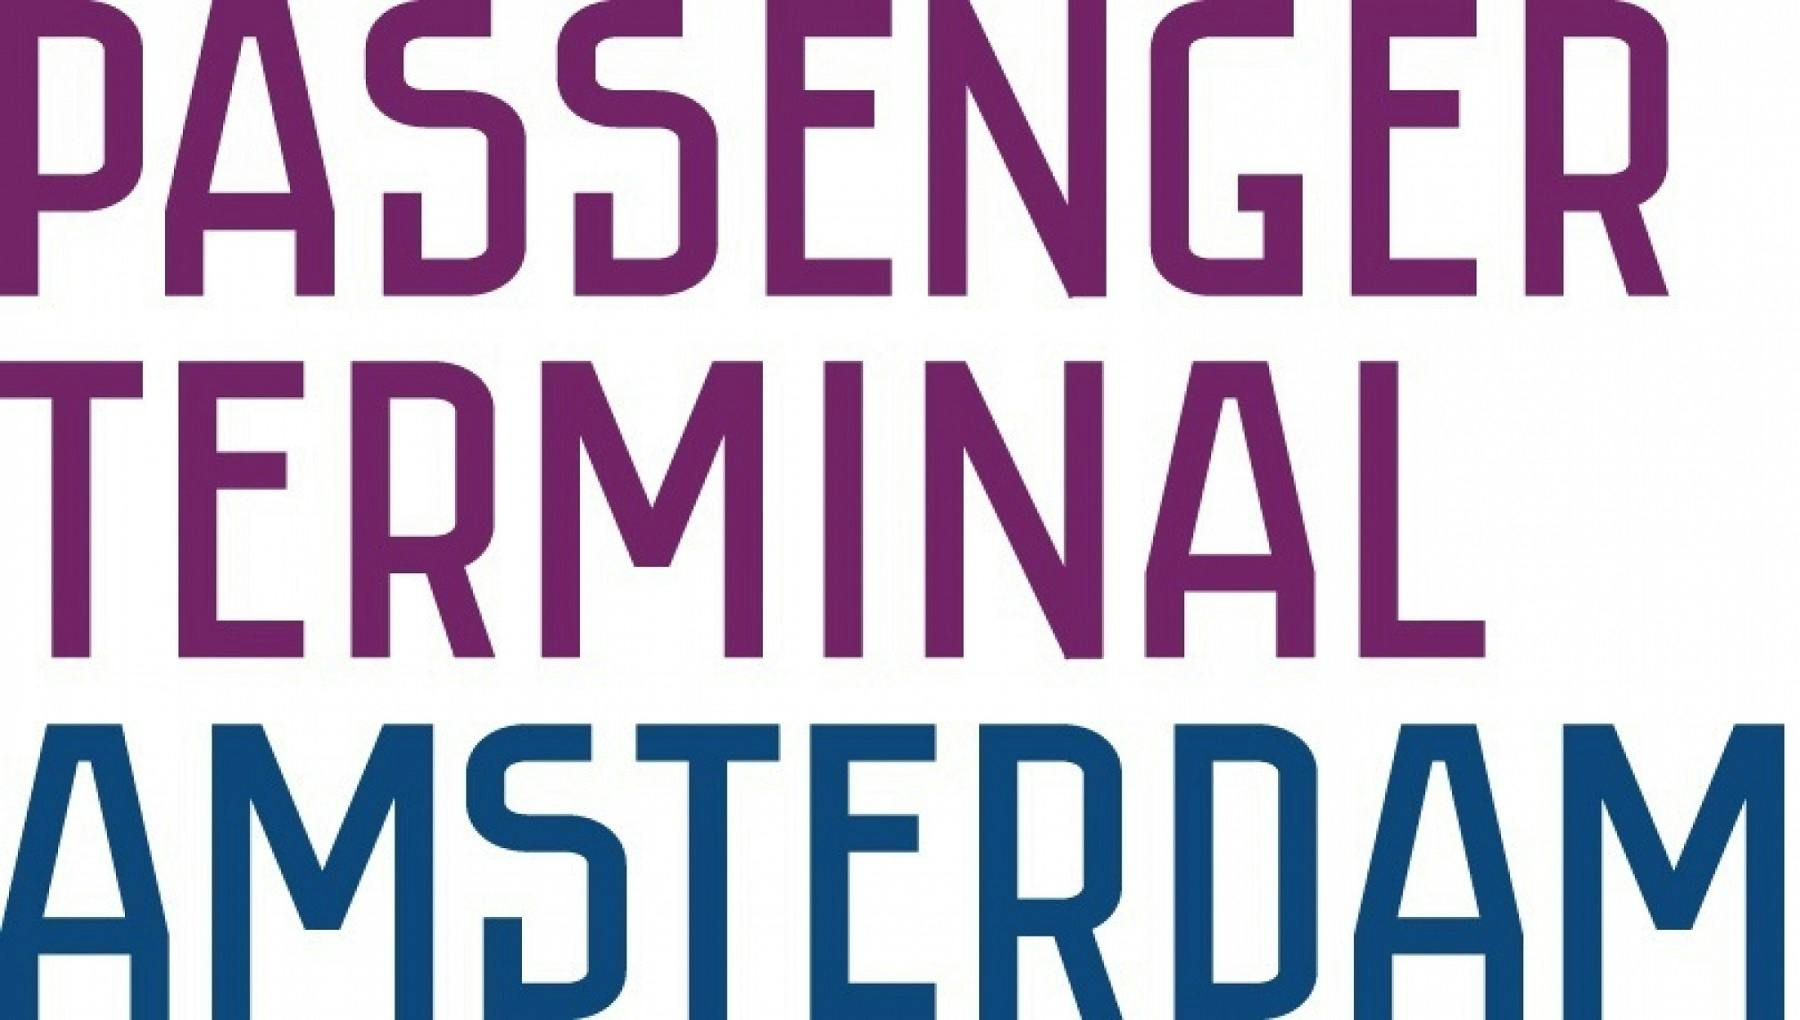 Passenger Terminal Amsterdam - dinner location